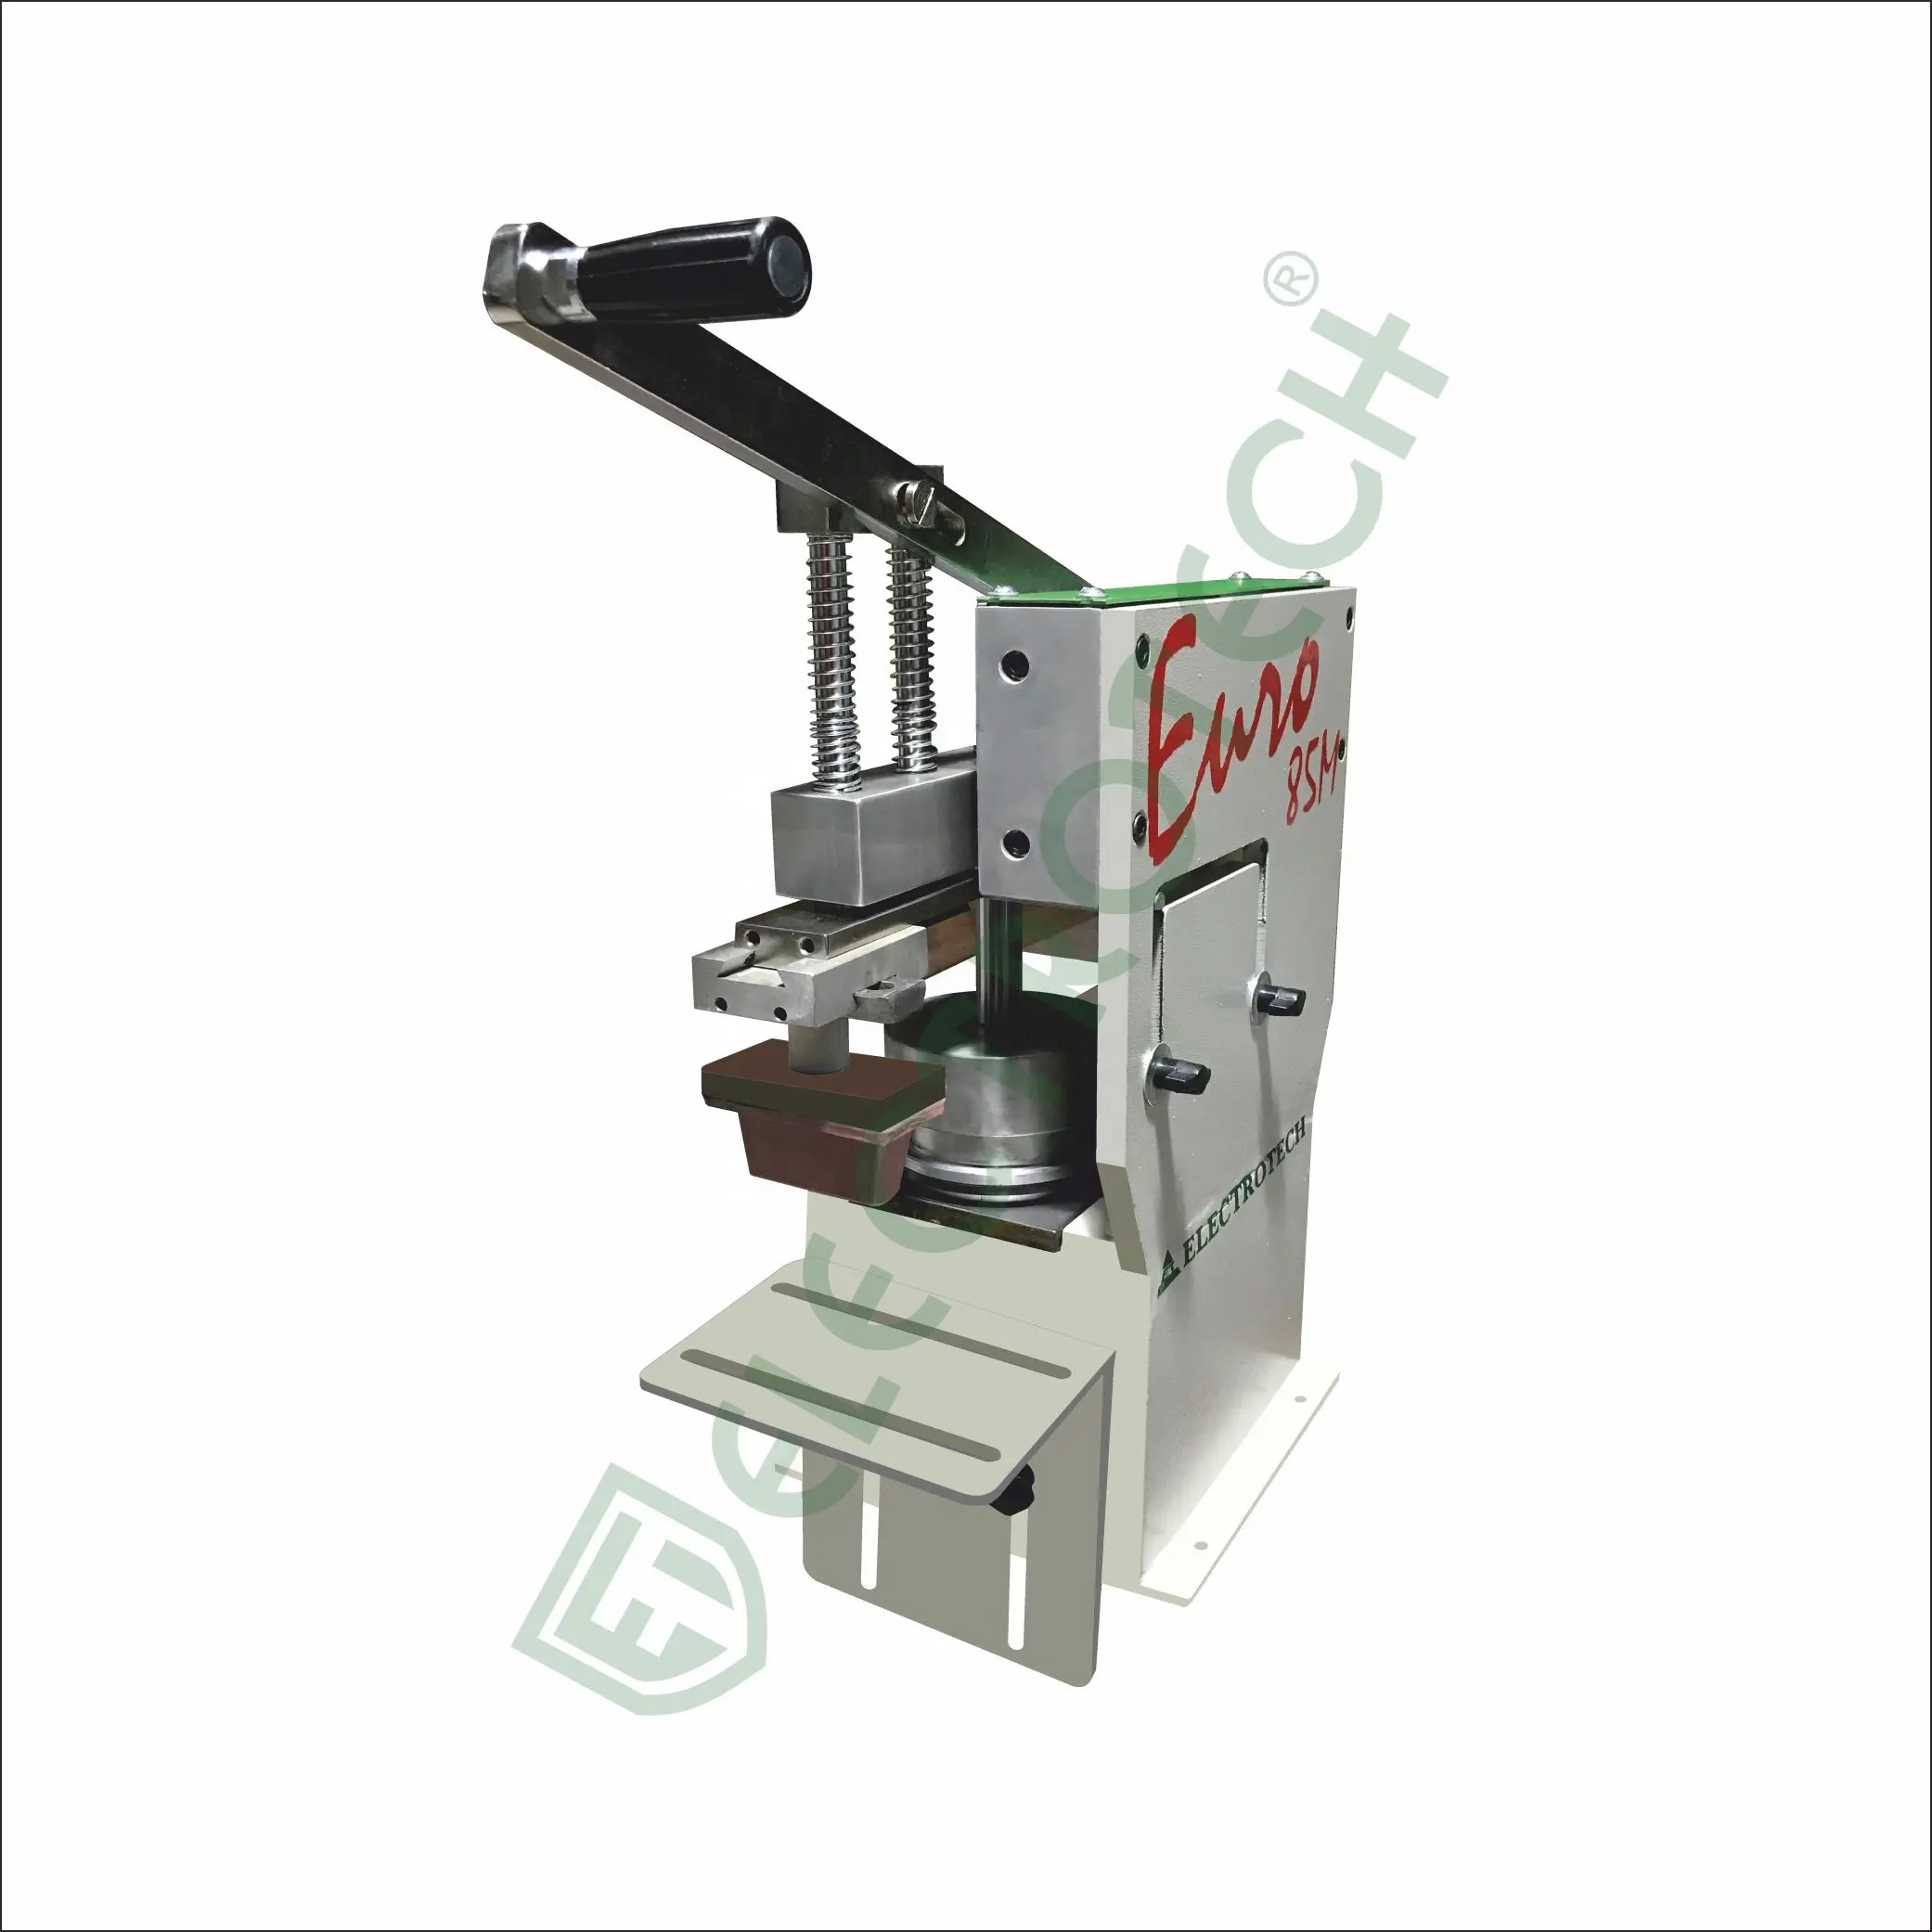 Mesin cetak bantalan Manual ekonomis dari India untuk pencetakan jumlah rendah pekerjaan kecil seperti pena Coaster gantungan kunci